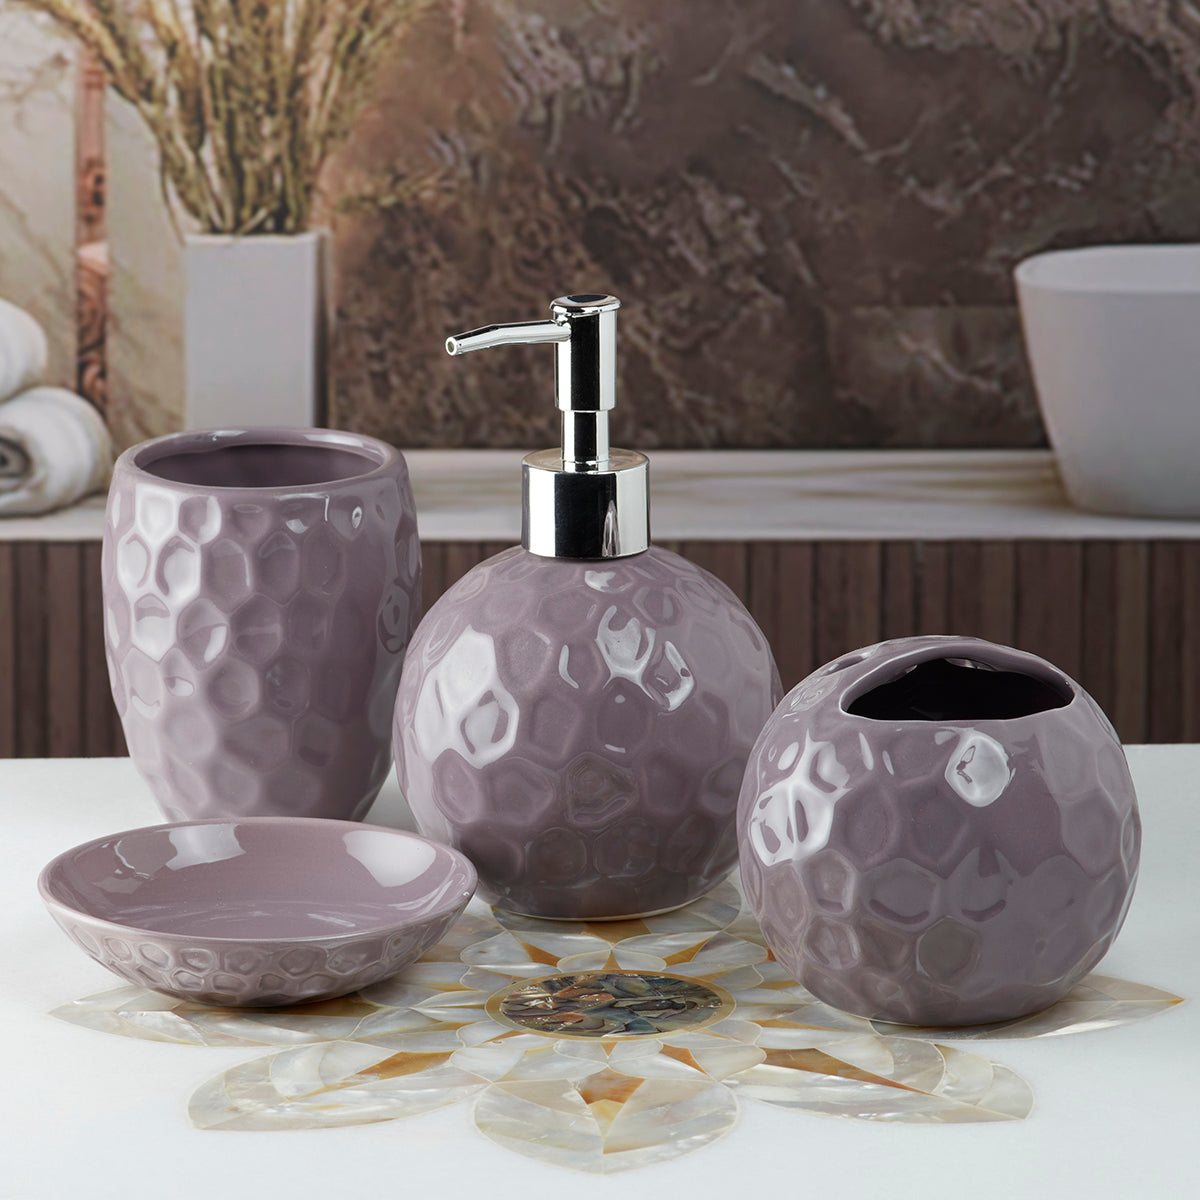 Ceramic Bathroom Accessories Set of 4 Bath Set with Soap Dispenser (10118)